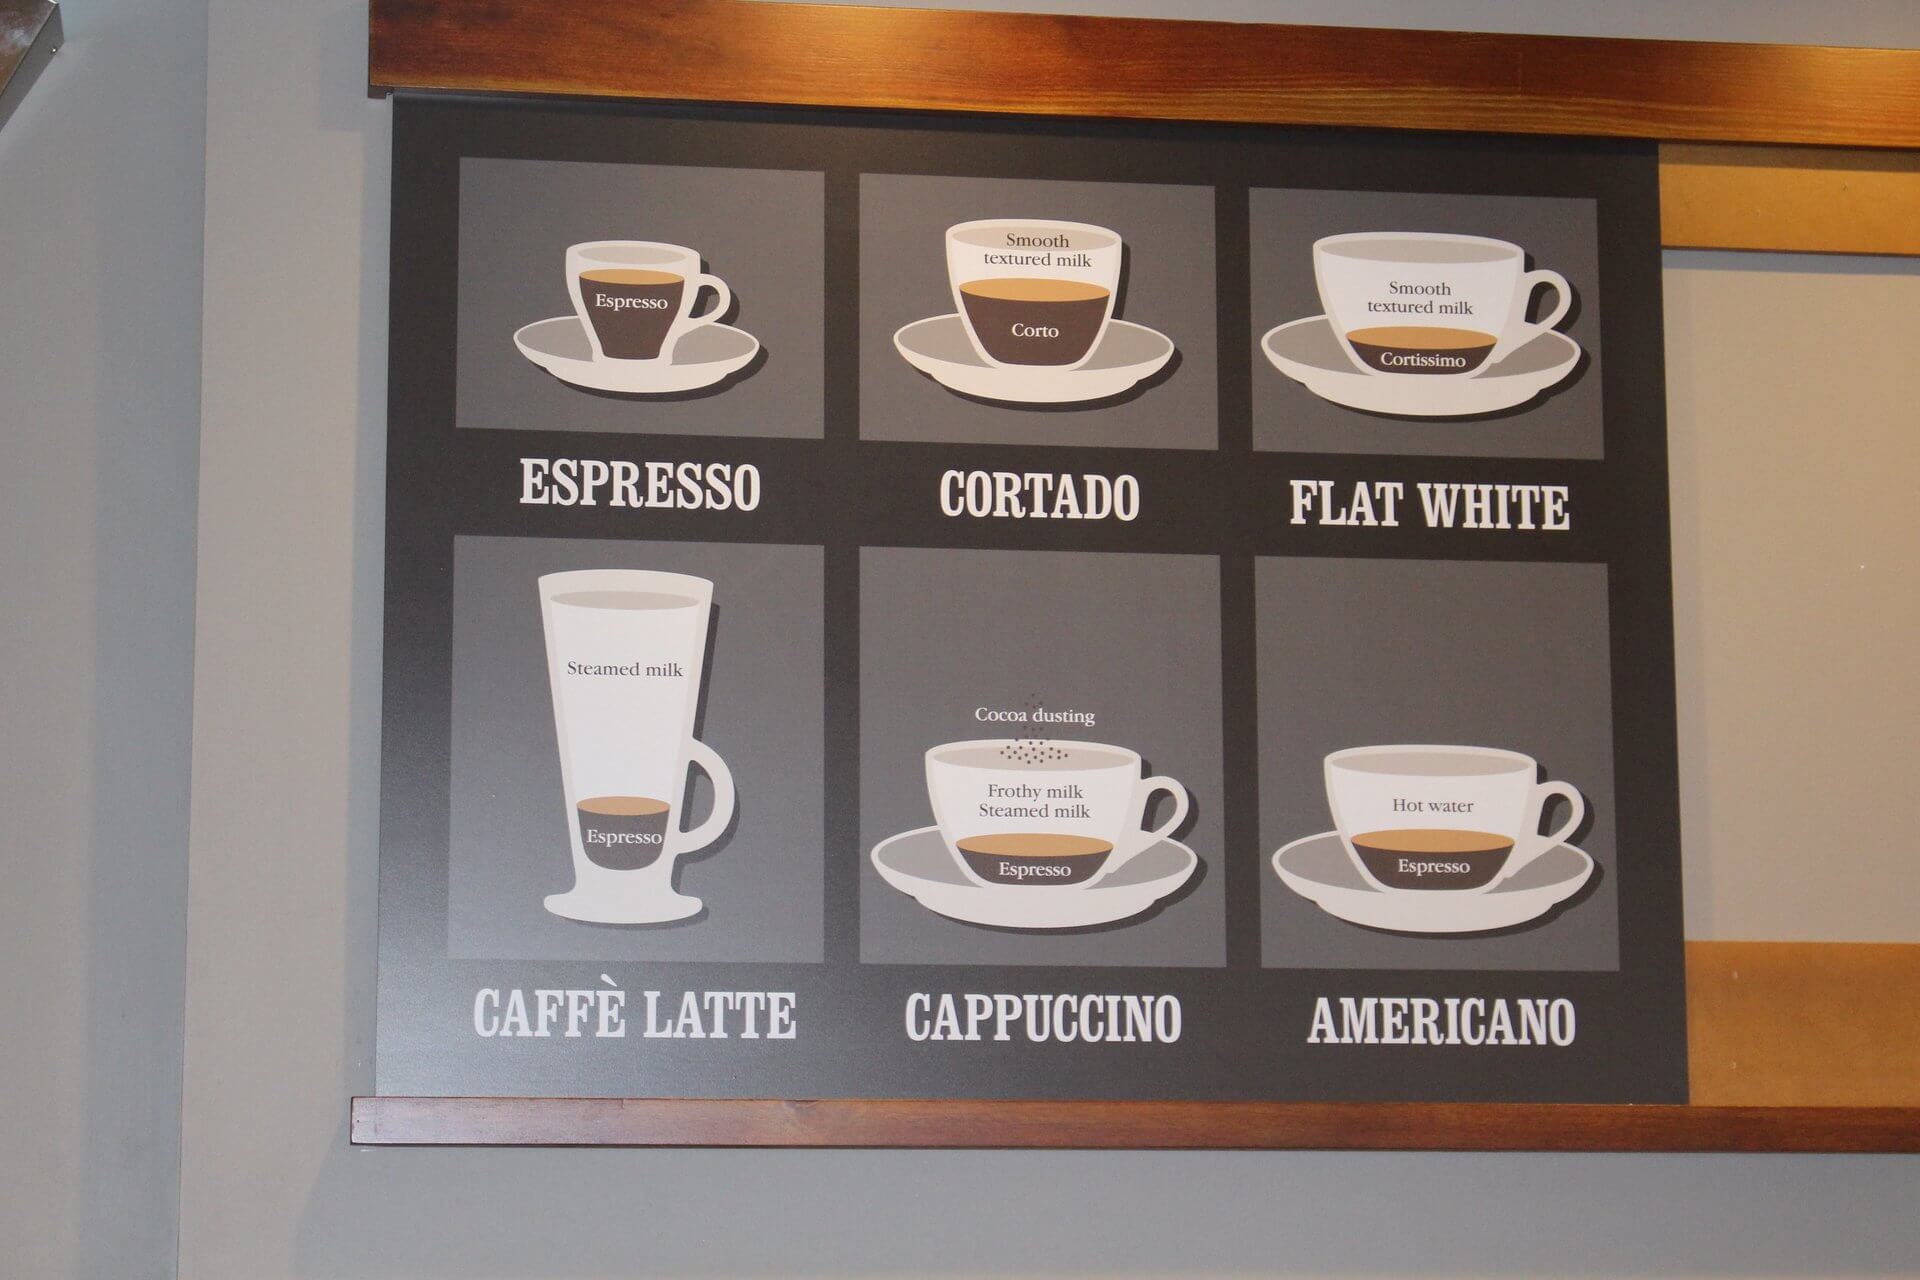 Costa coffee interior menu